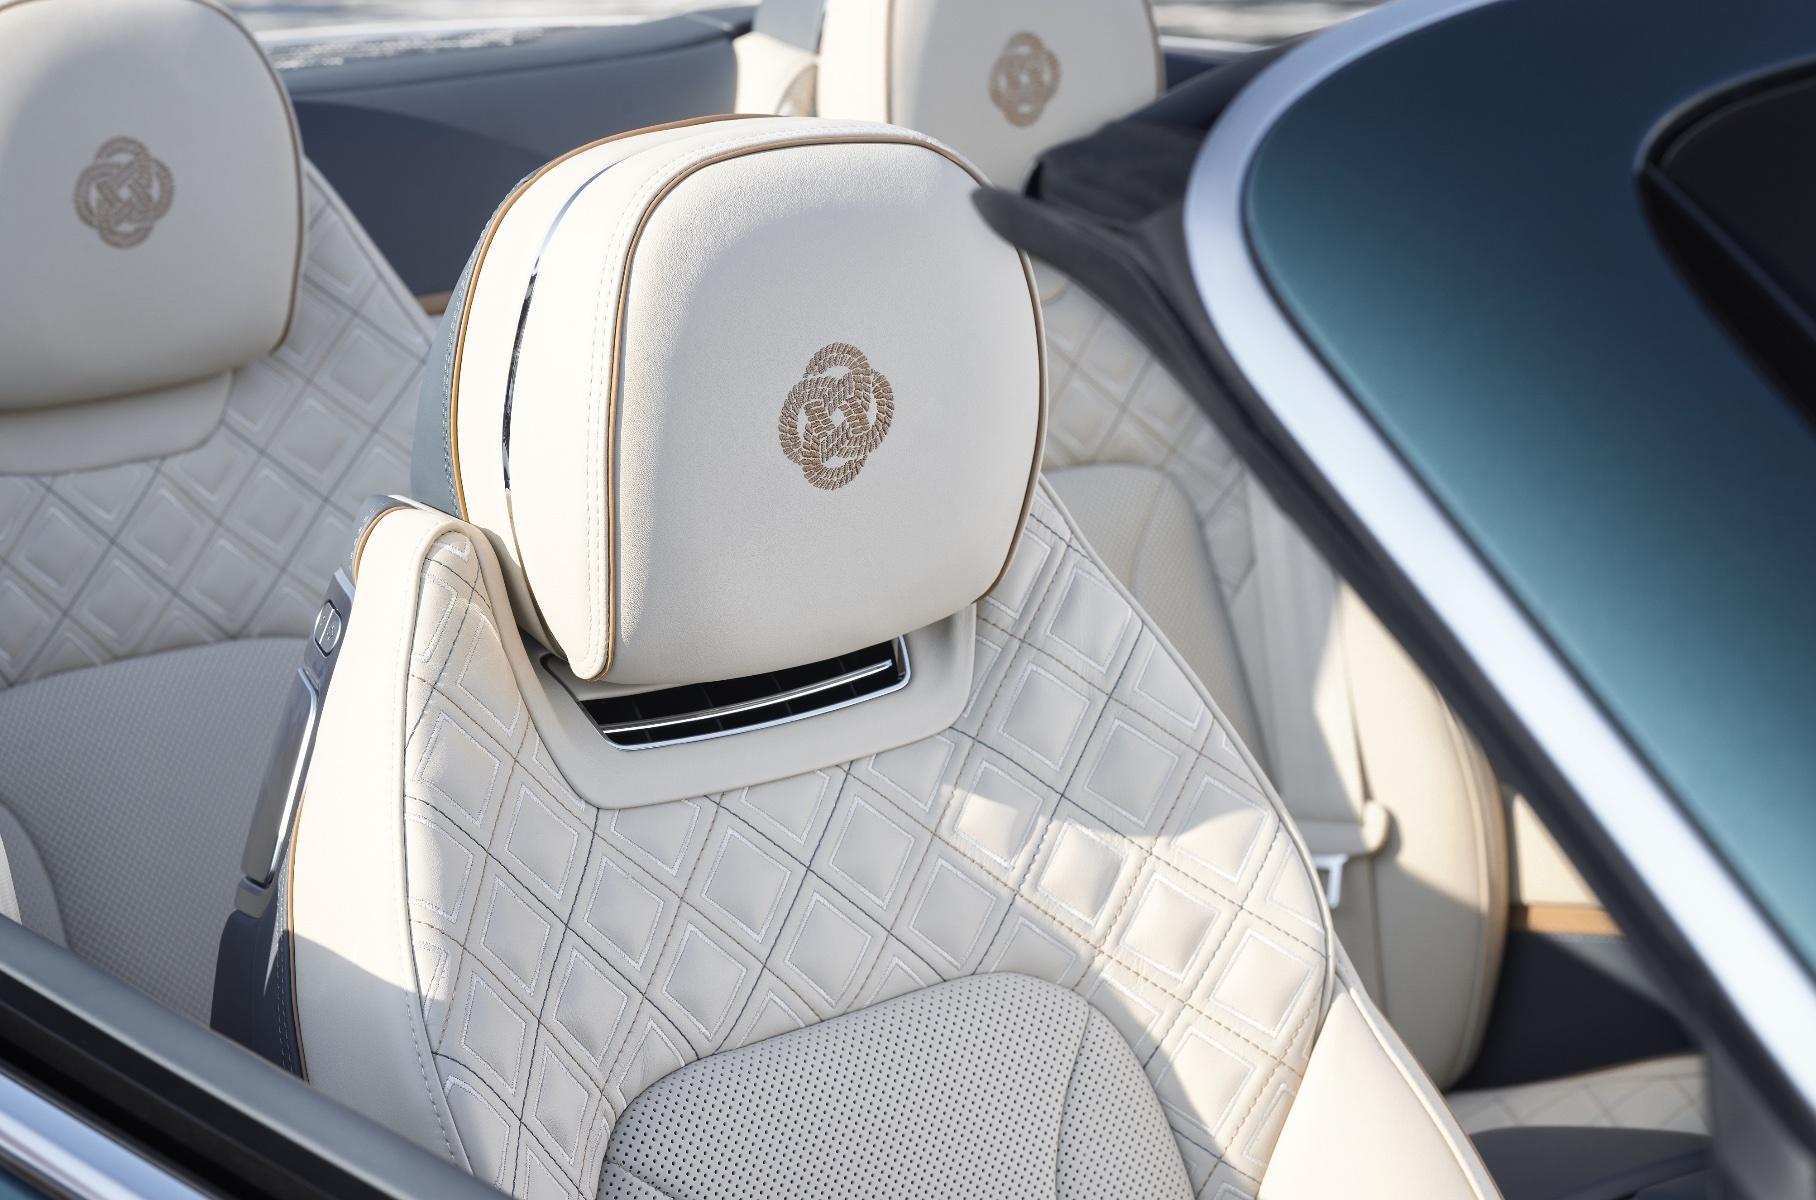 Bentley представила "морські" версії кабріолету Continental GT